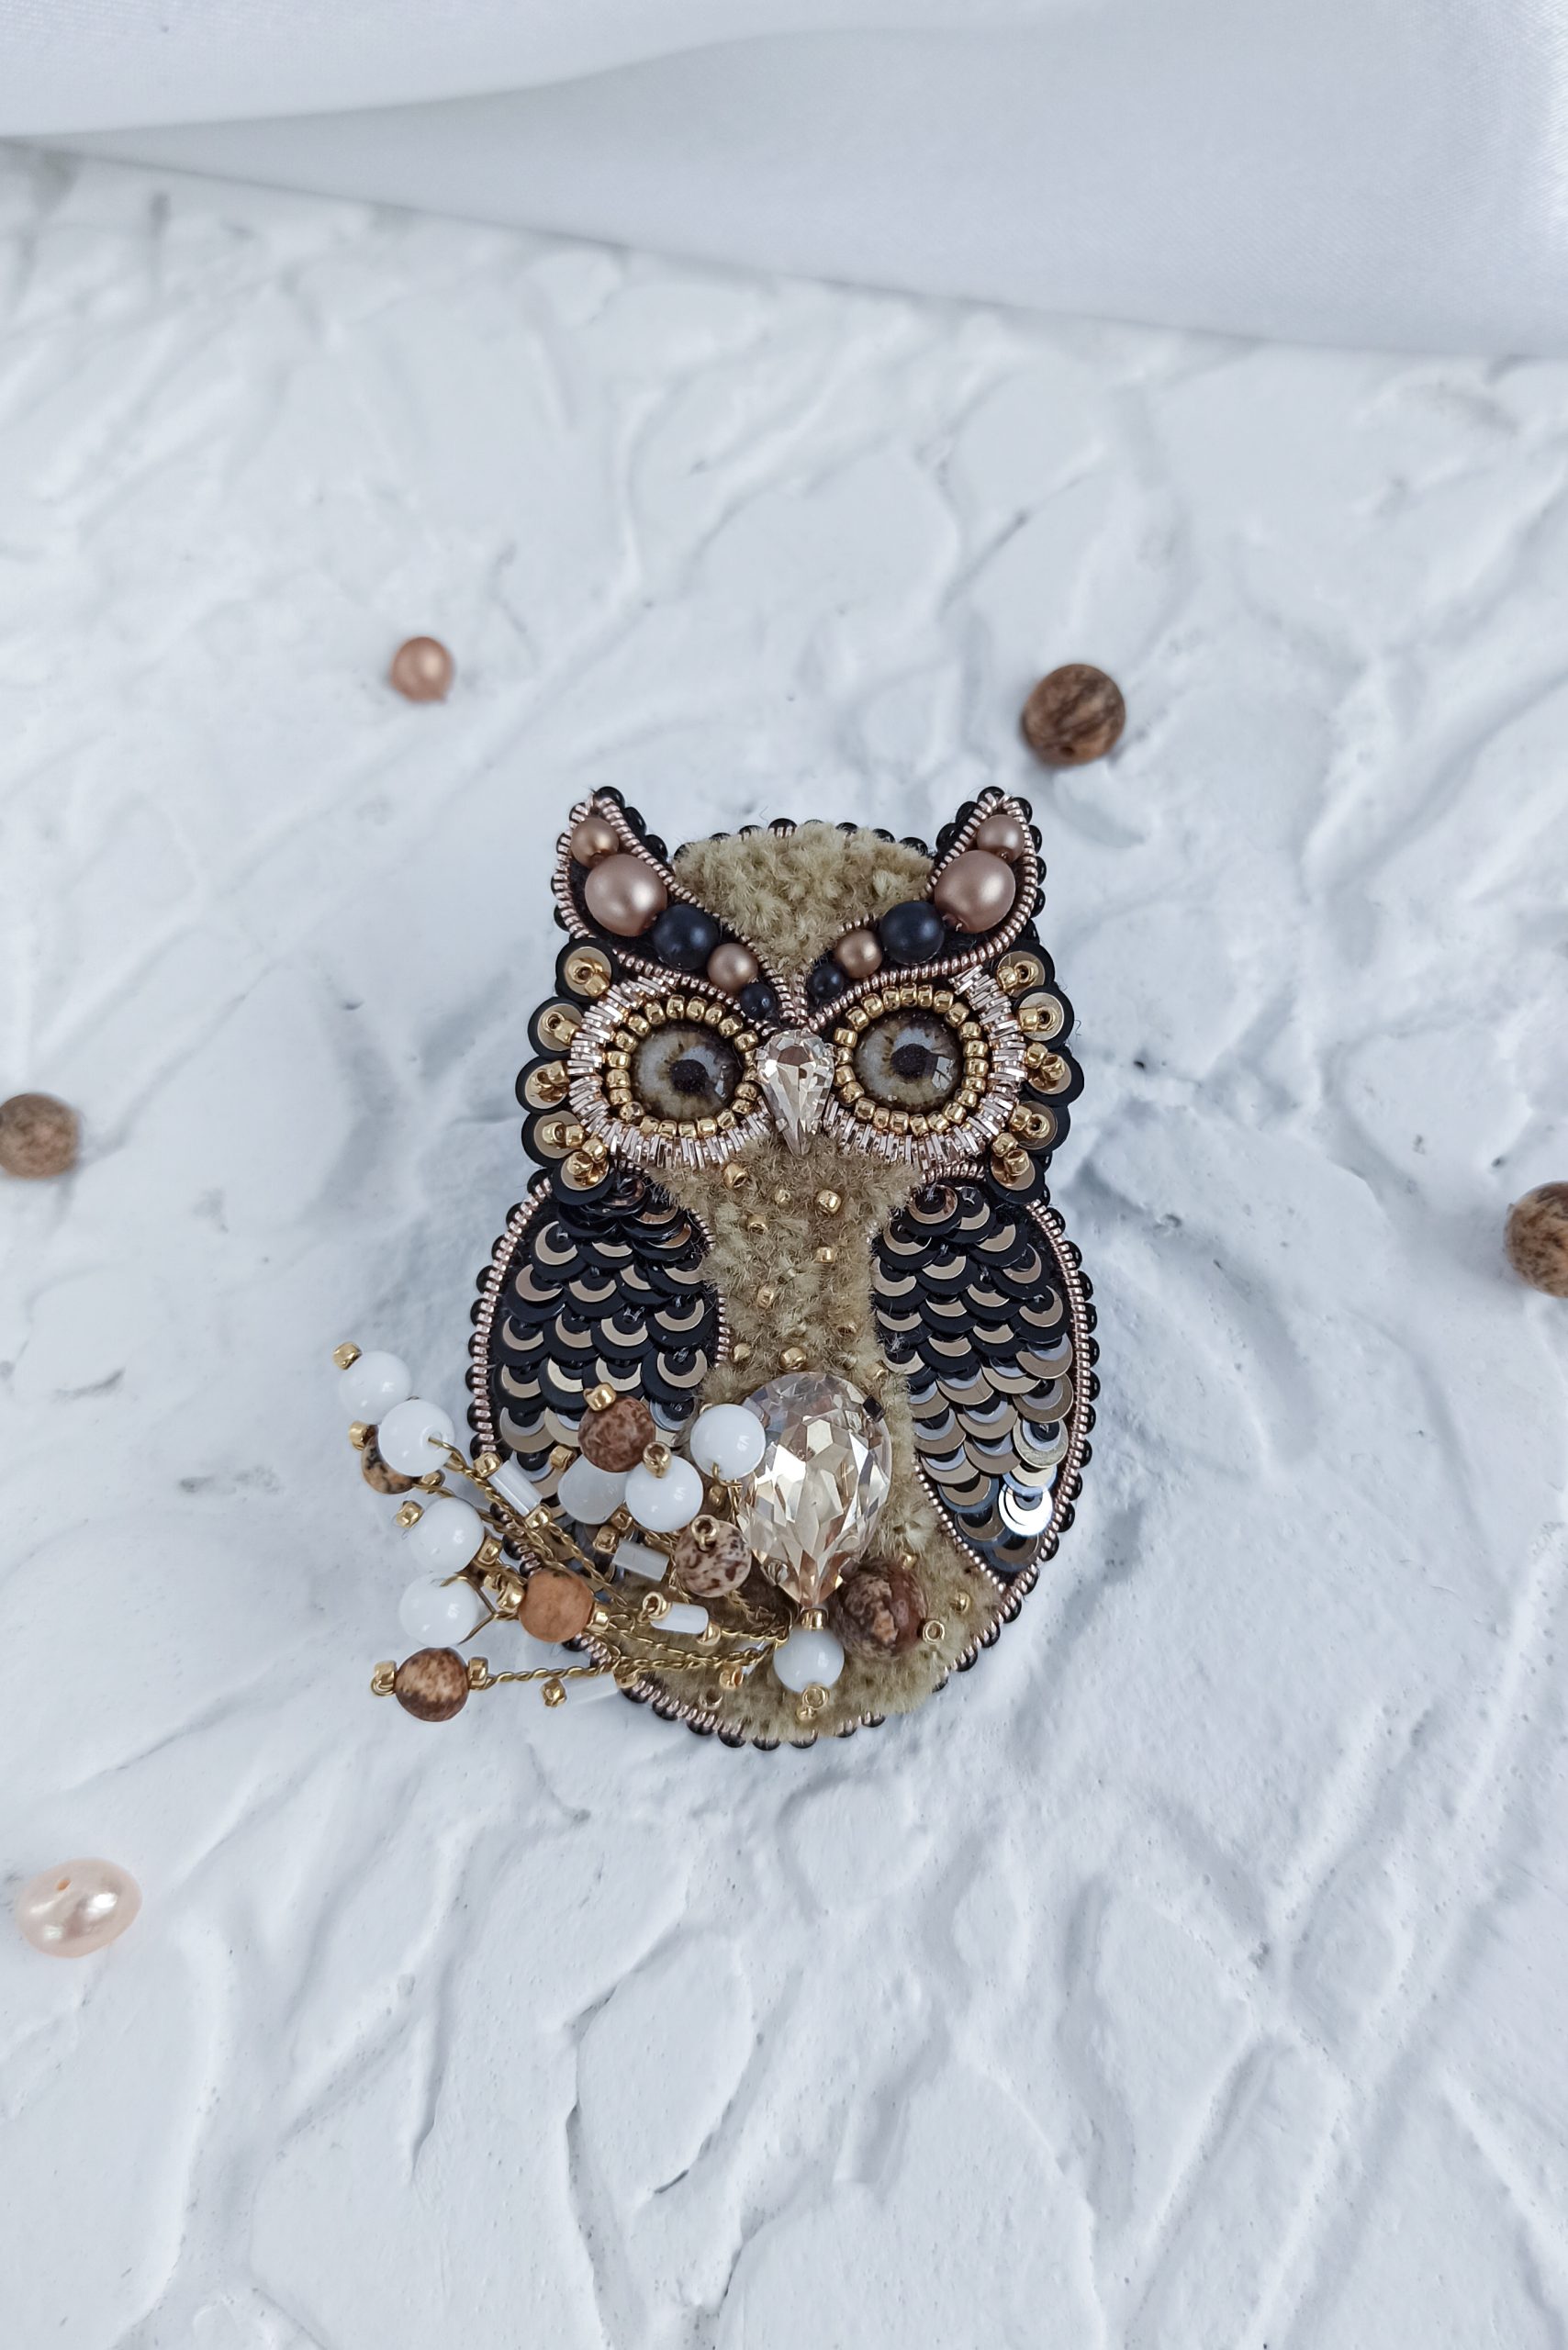 Rhinestone Owl Bag Charm – mBell-ish